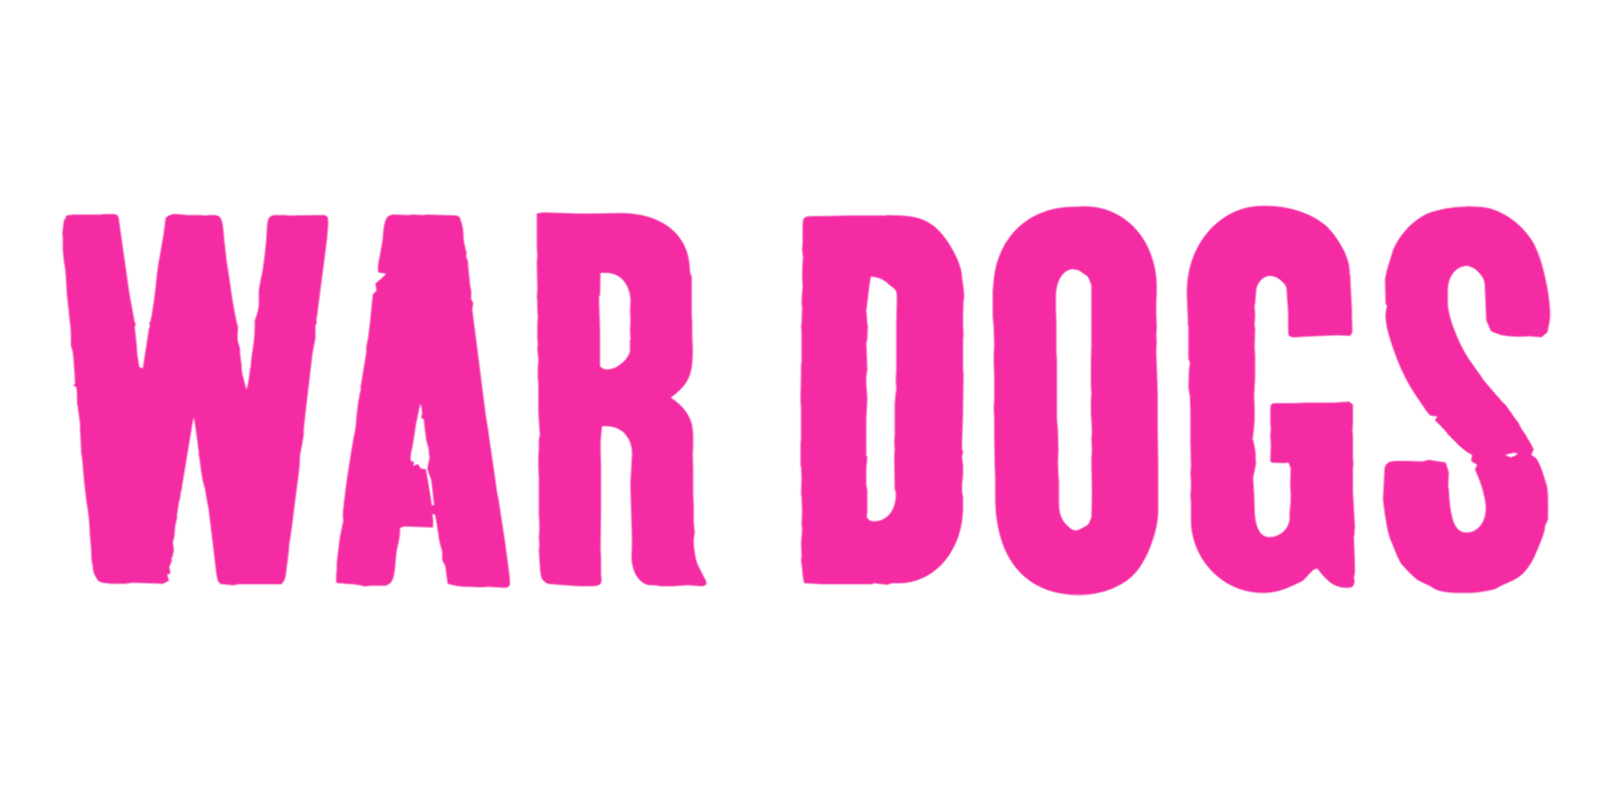 war dogs 2016 full movie